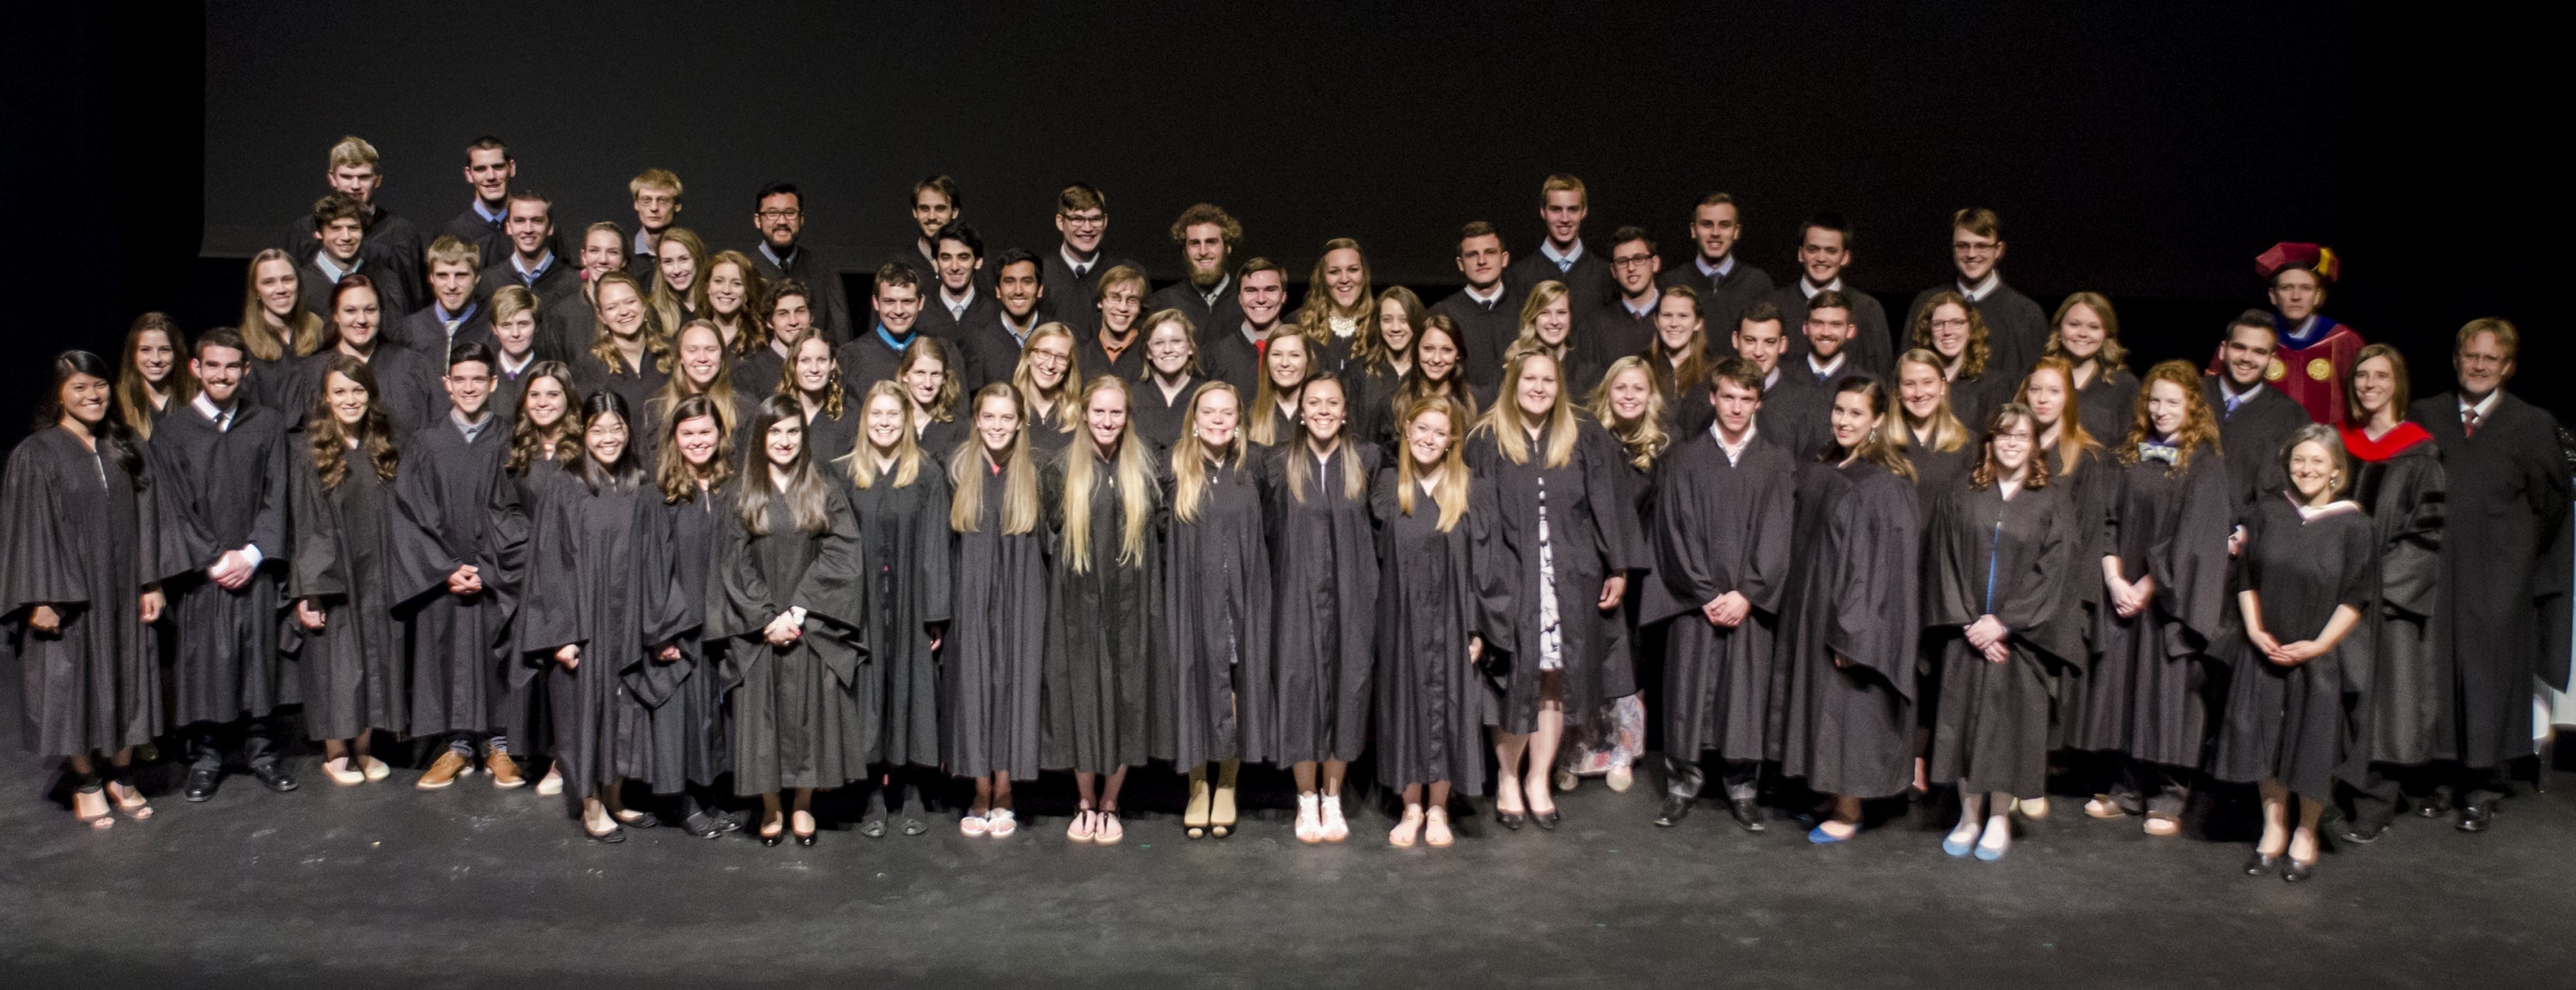 Grebel graduating class of 2015